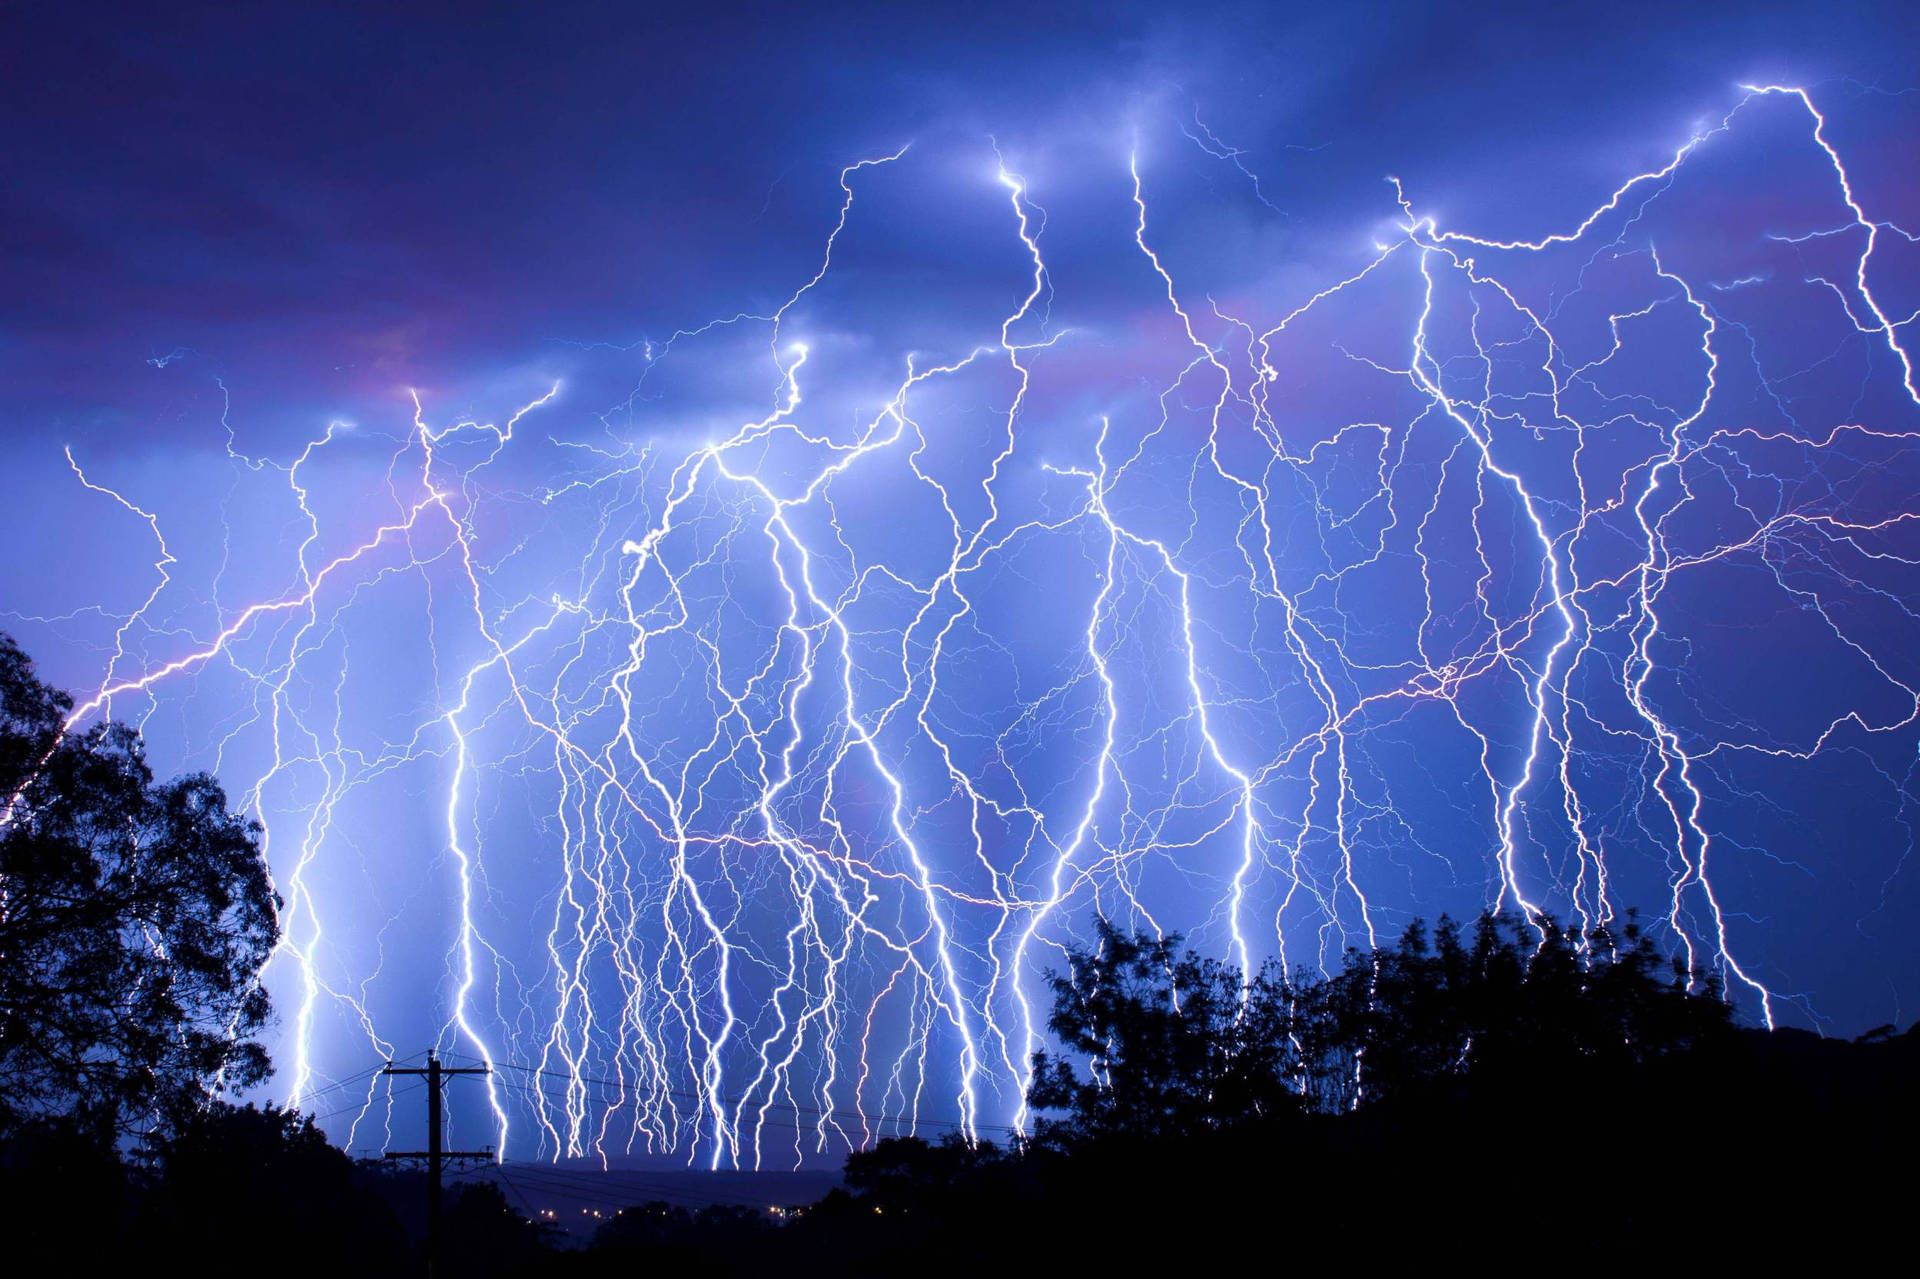 A large number of lightning strikes in the sky - Lightning